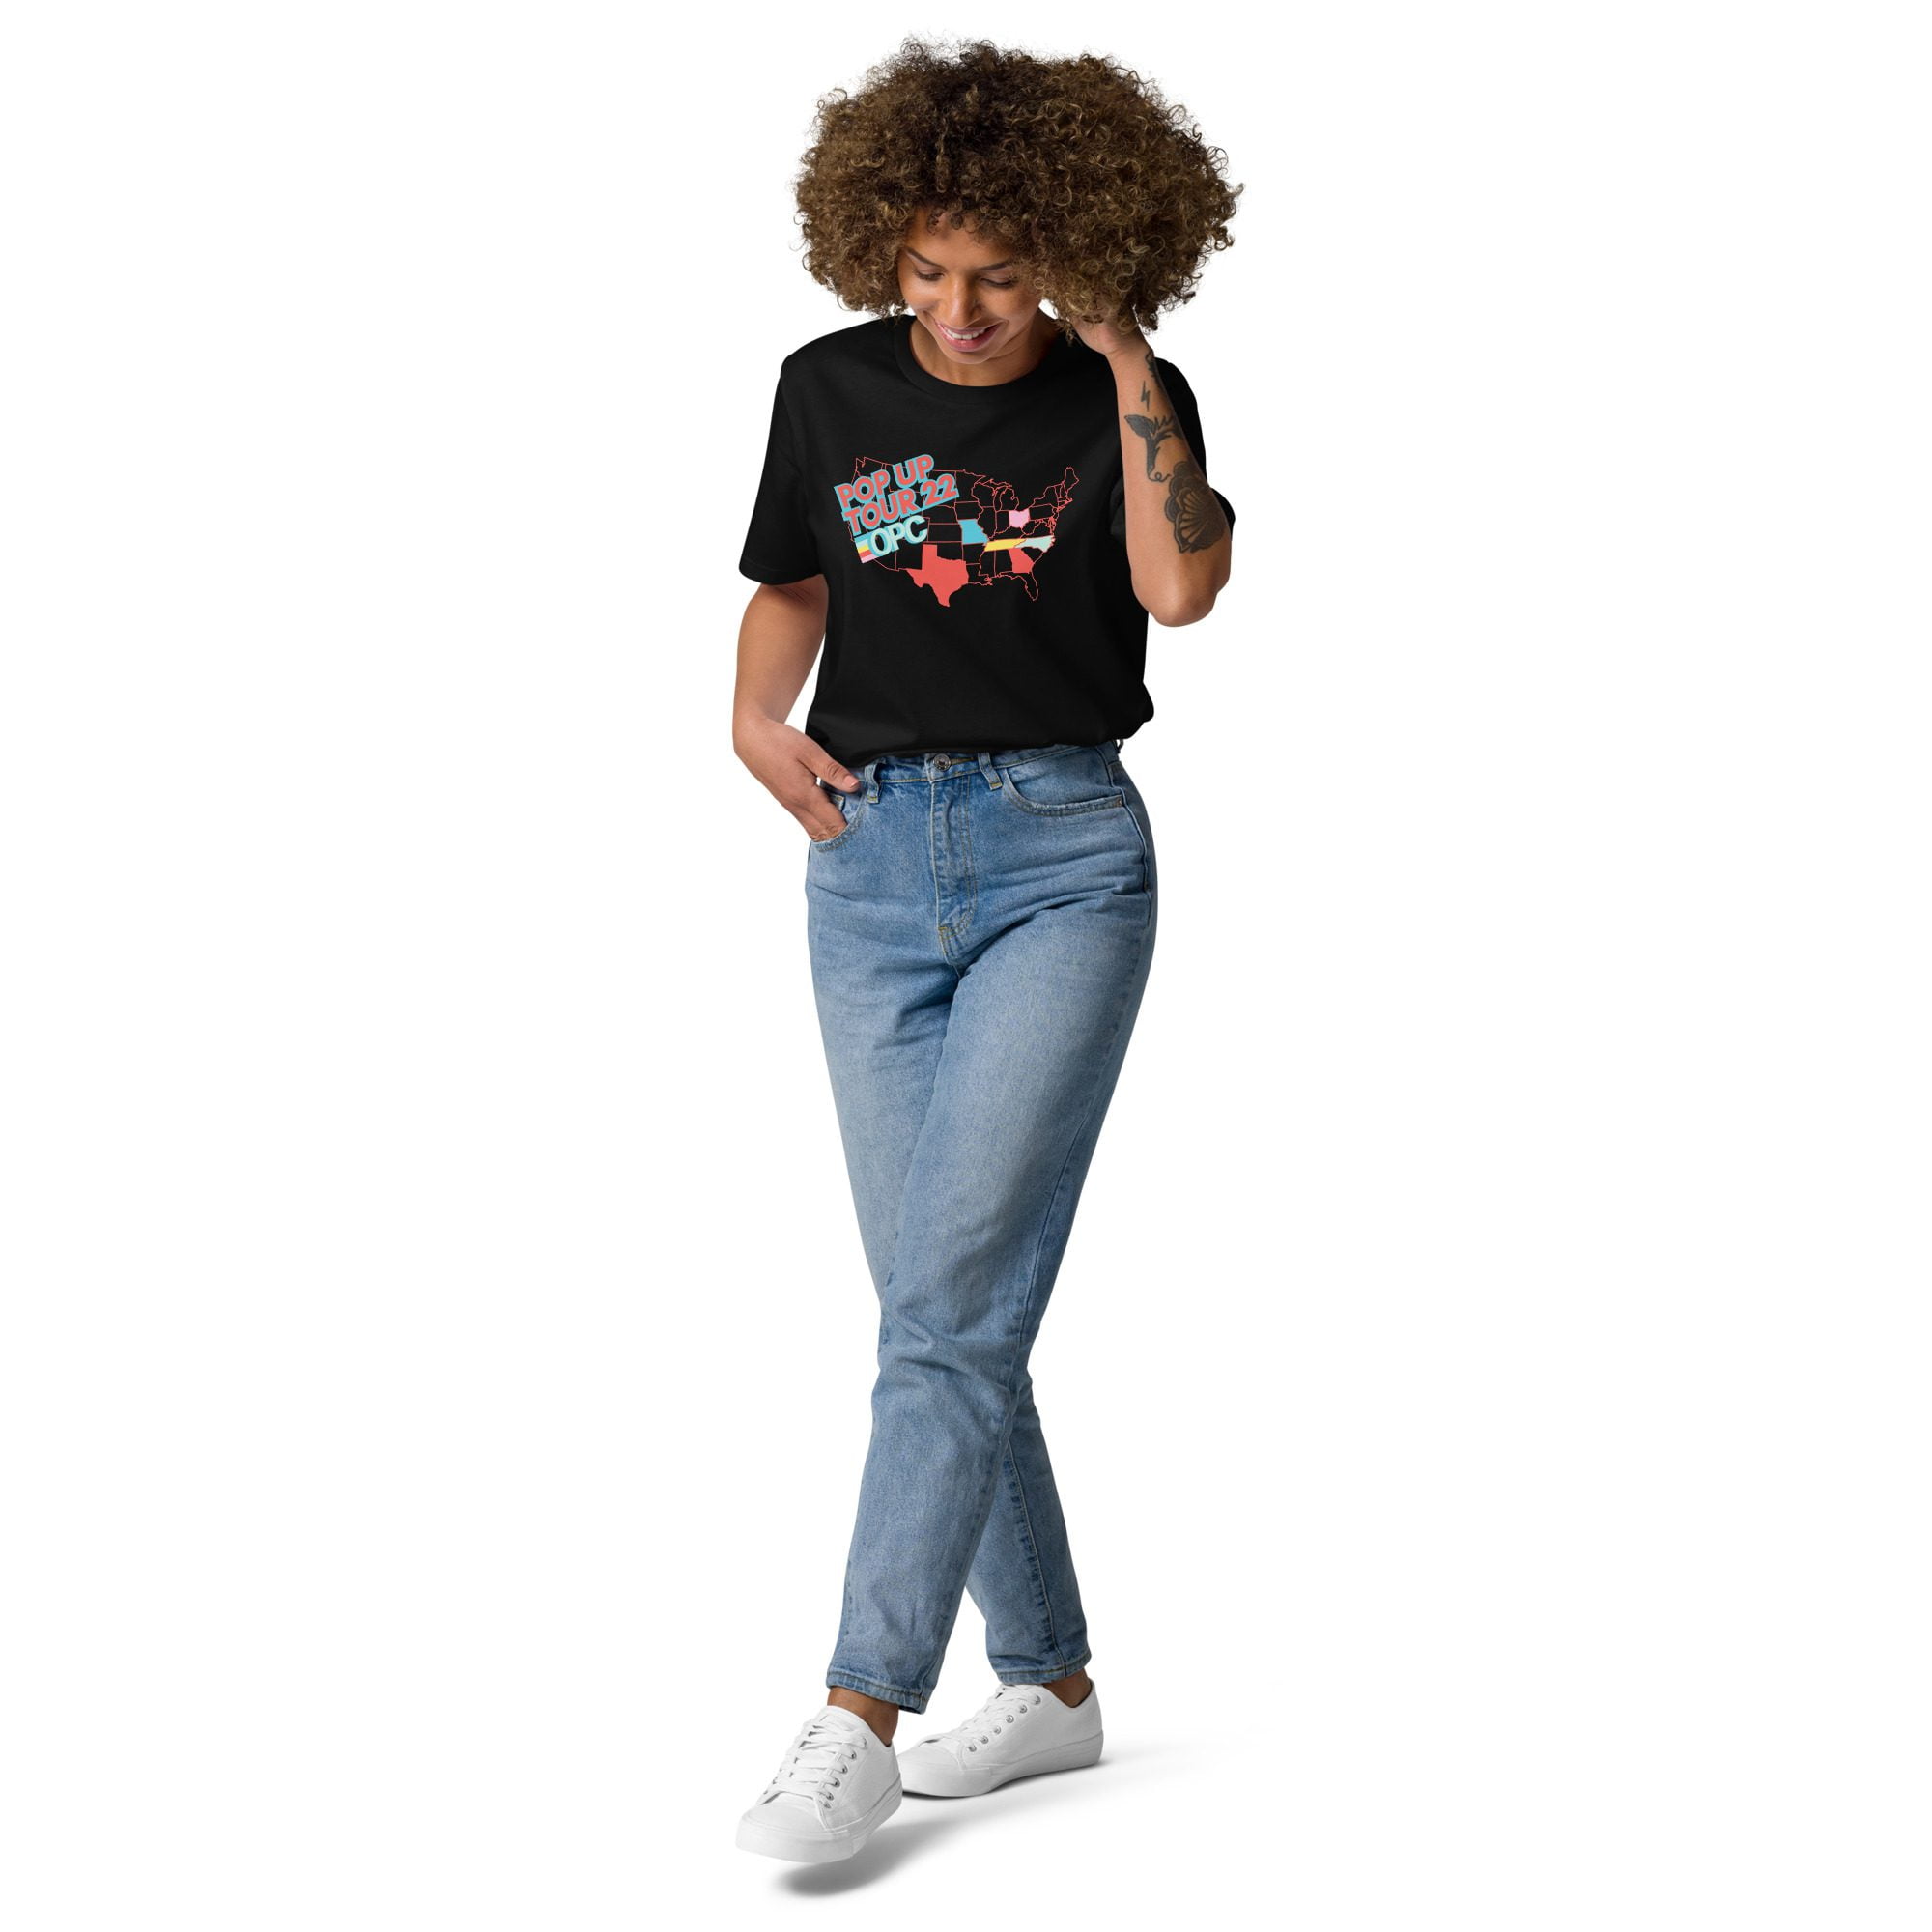 OPC Pop Up Tour ’22 Unisex Organic Cotton T-Shirt